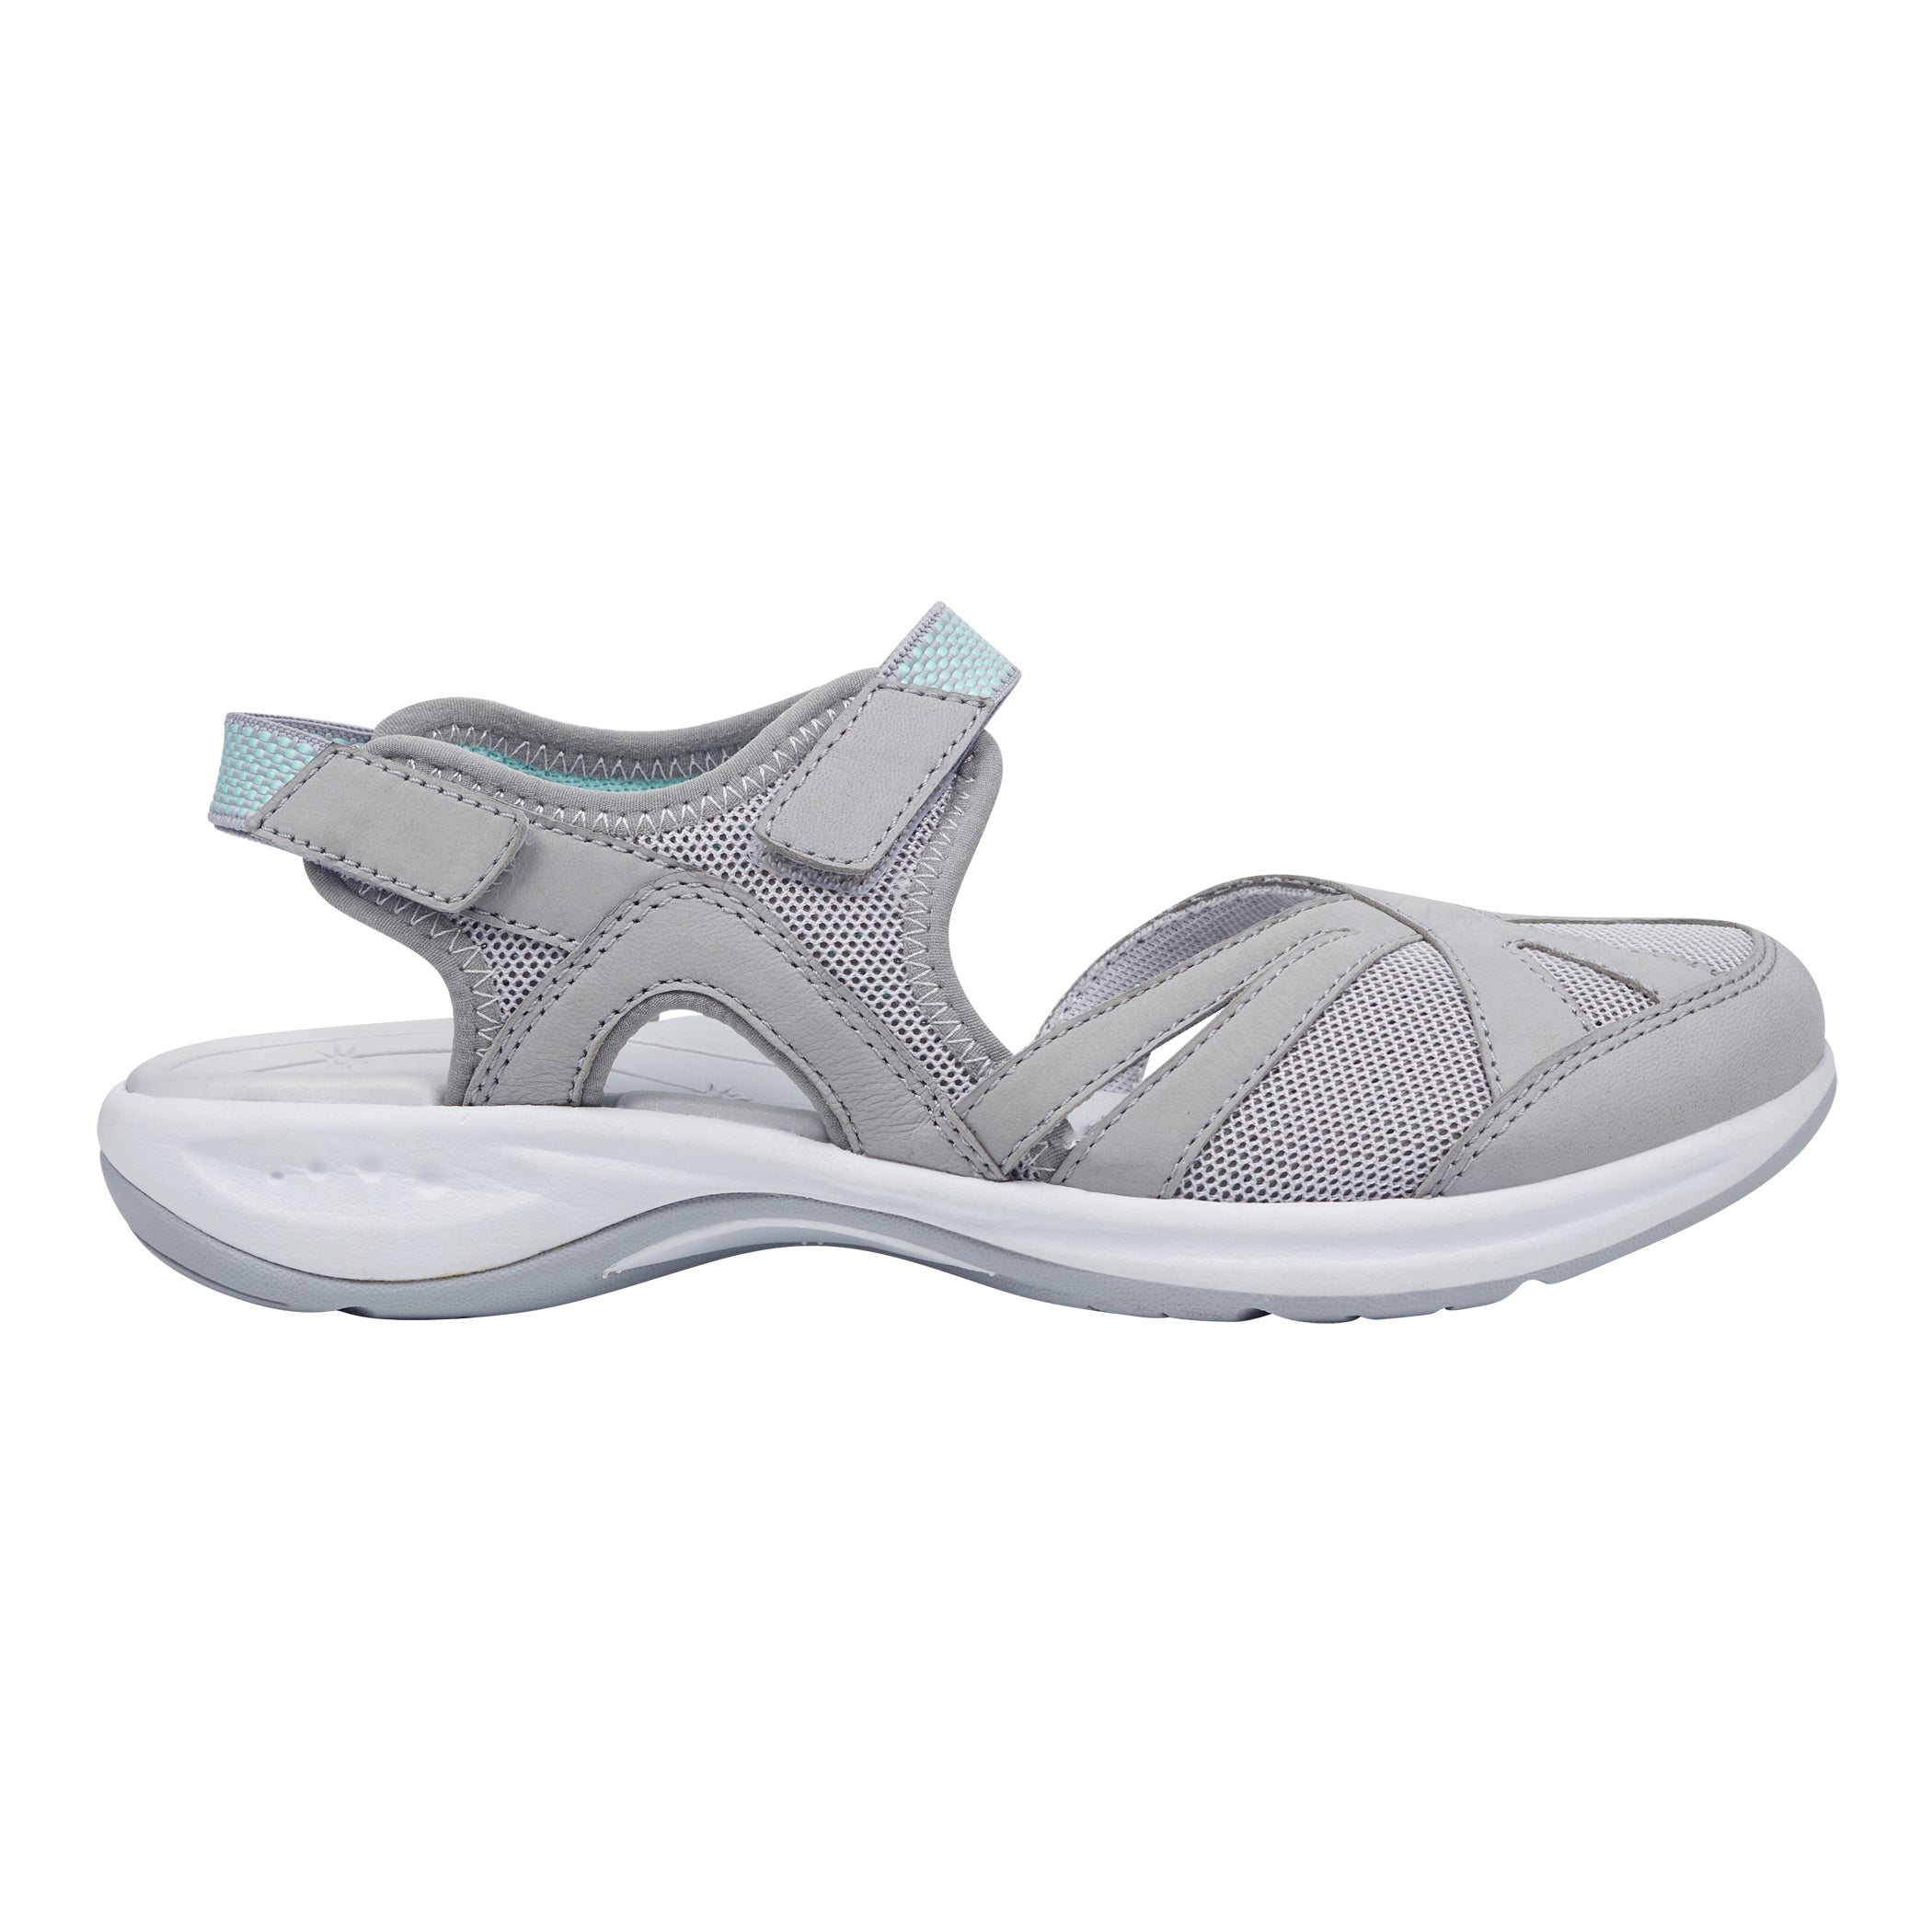 splash-flat-hiking-sandals-in-light-gray-multi